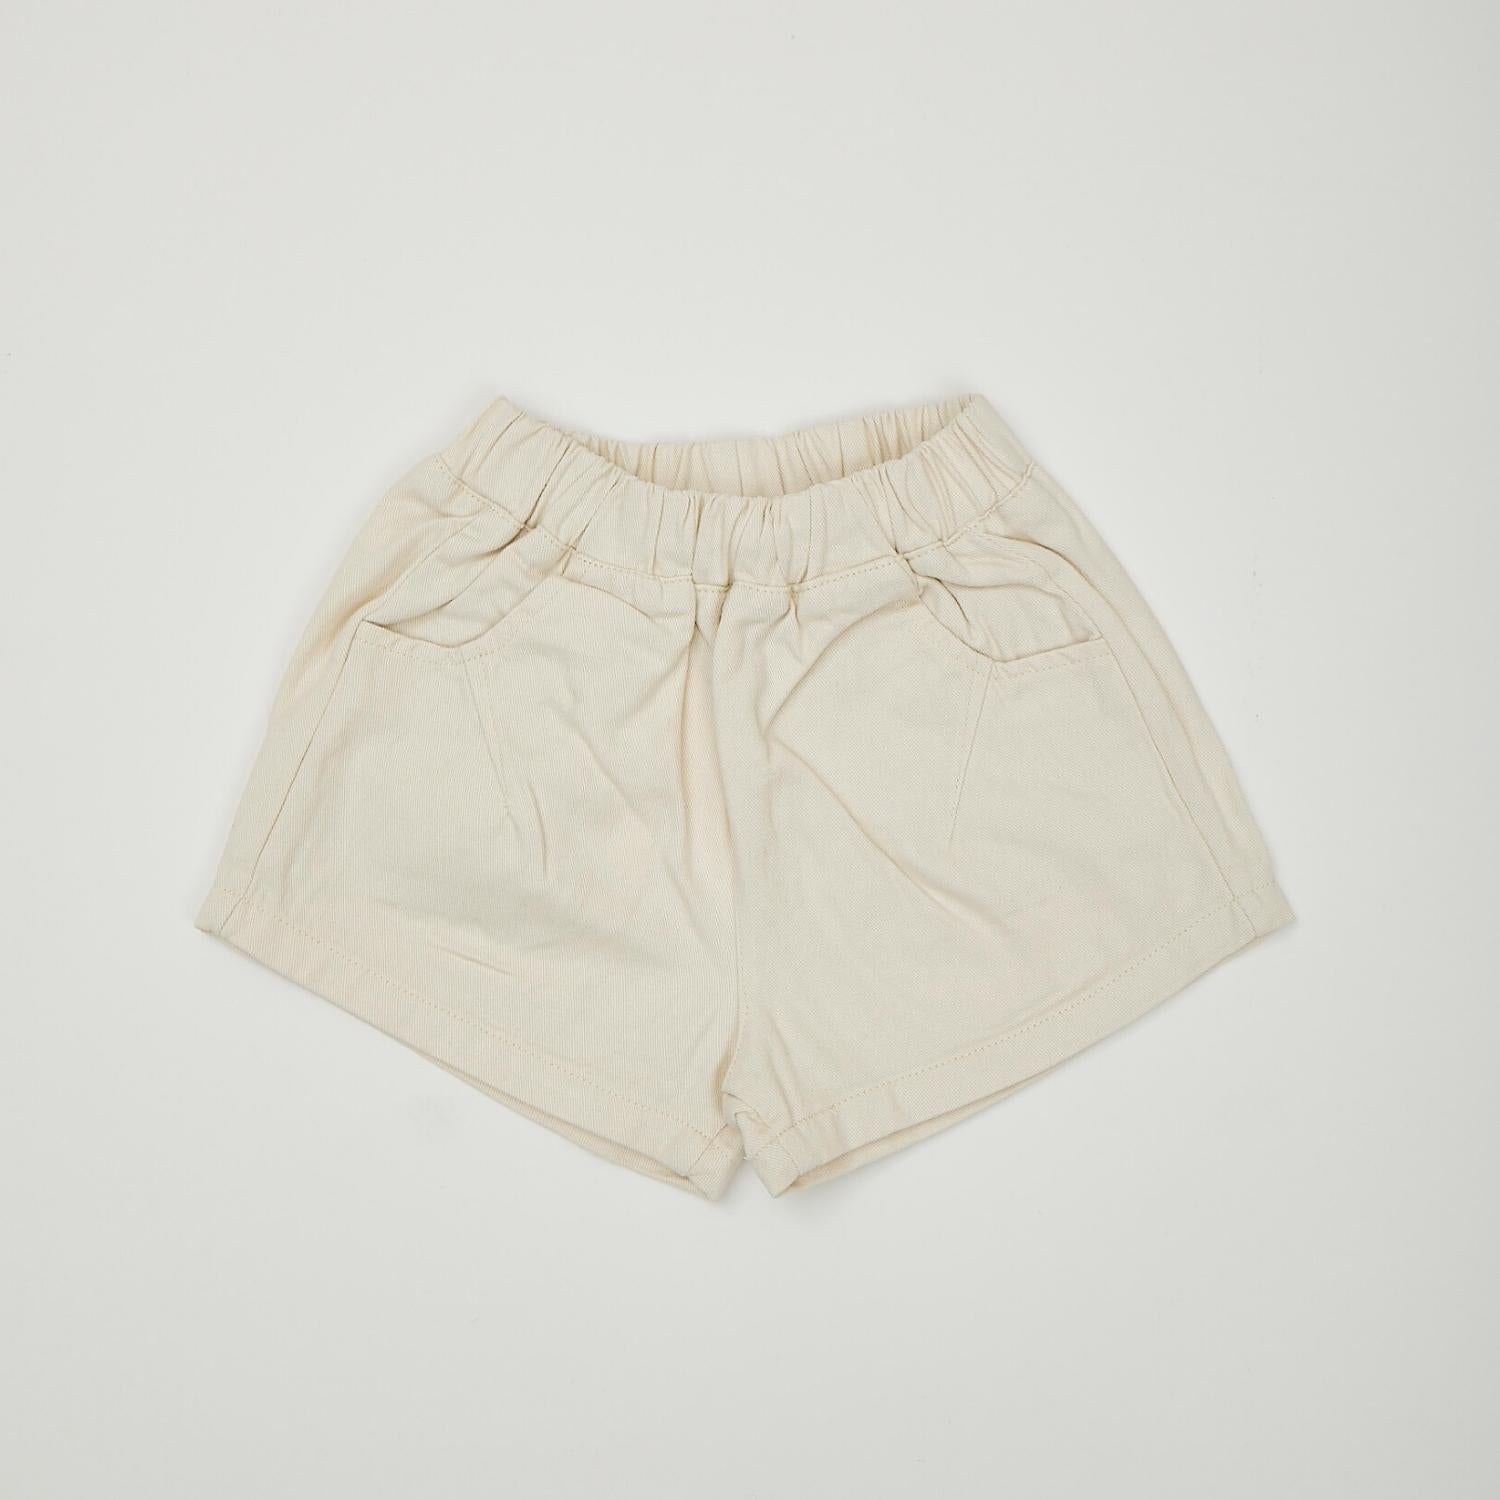 【Outlet】 Natural shorts